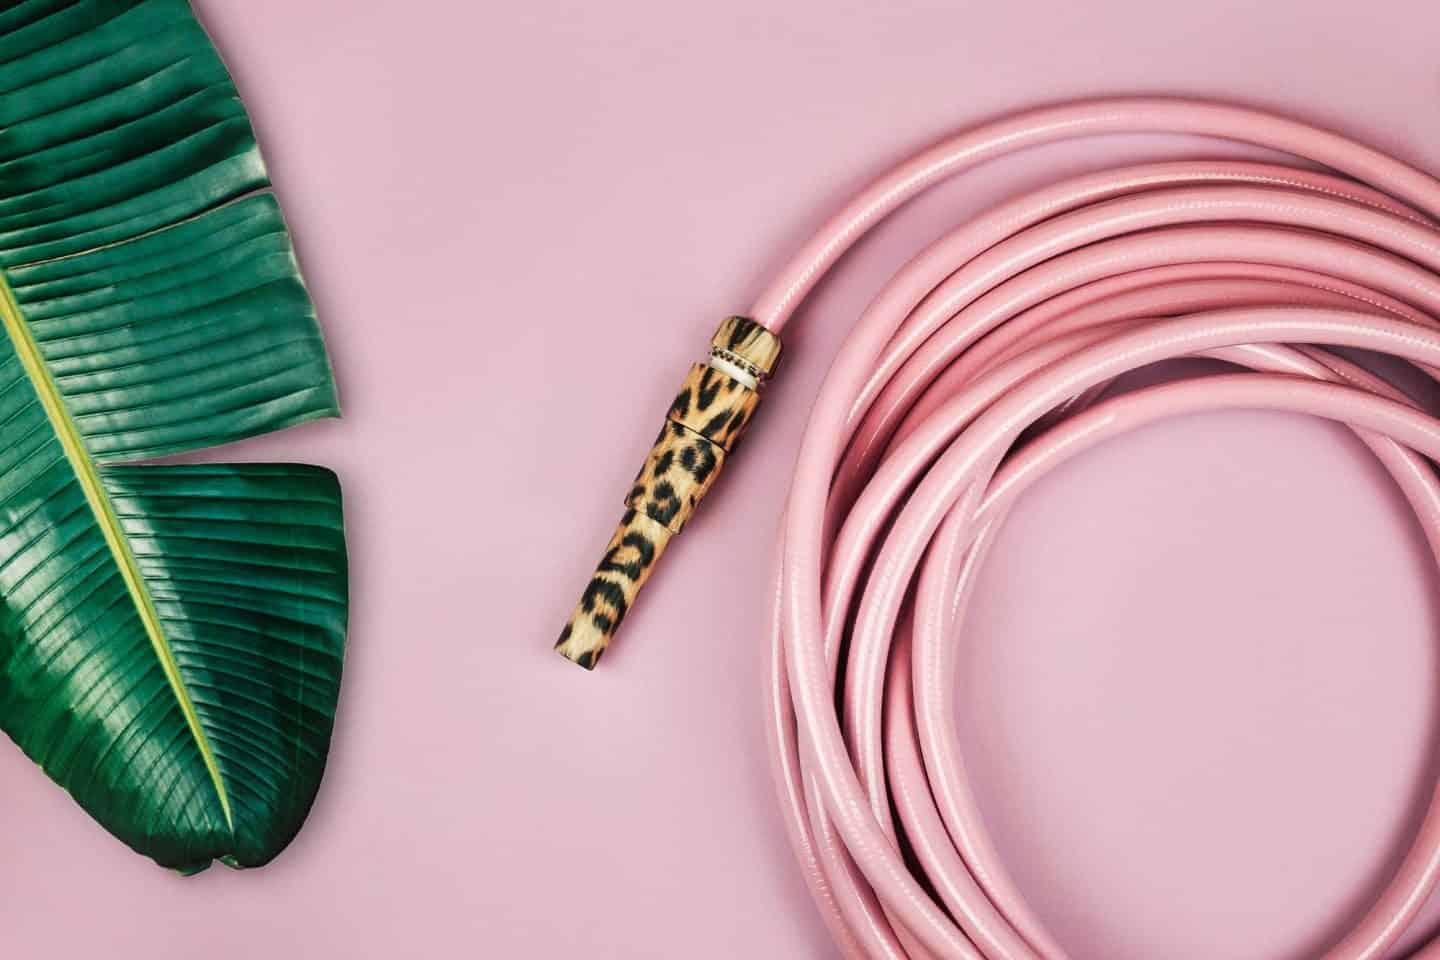 Garden Glory - Stylish garden equipment - pink garden hose with leopard print nozzle